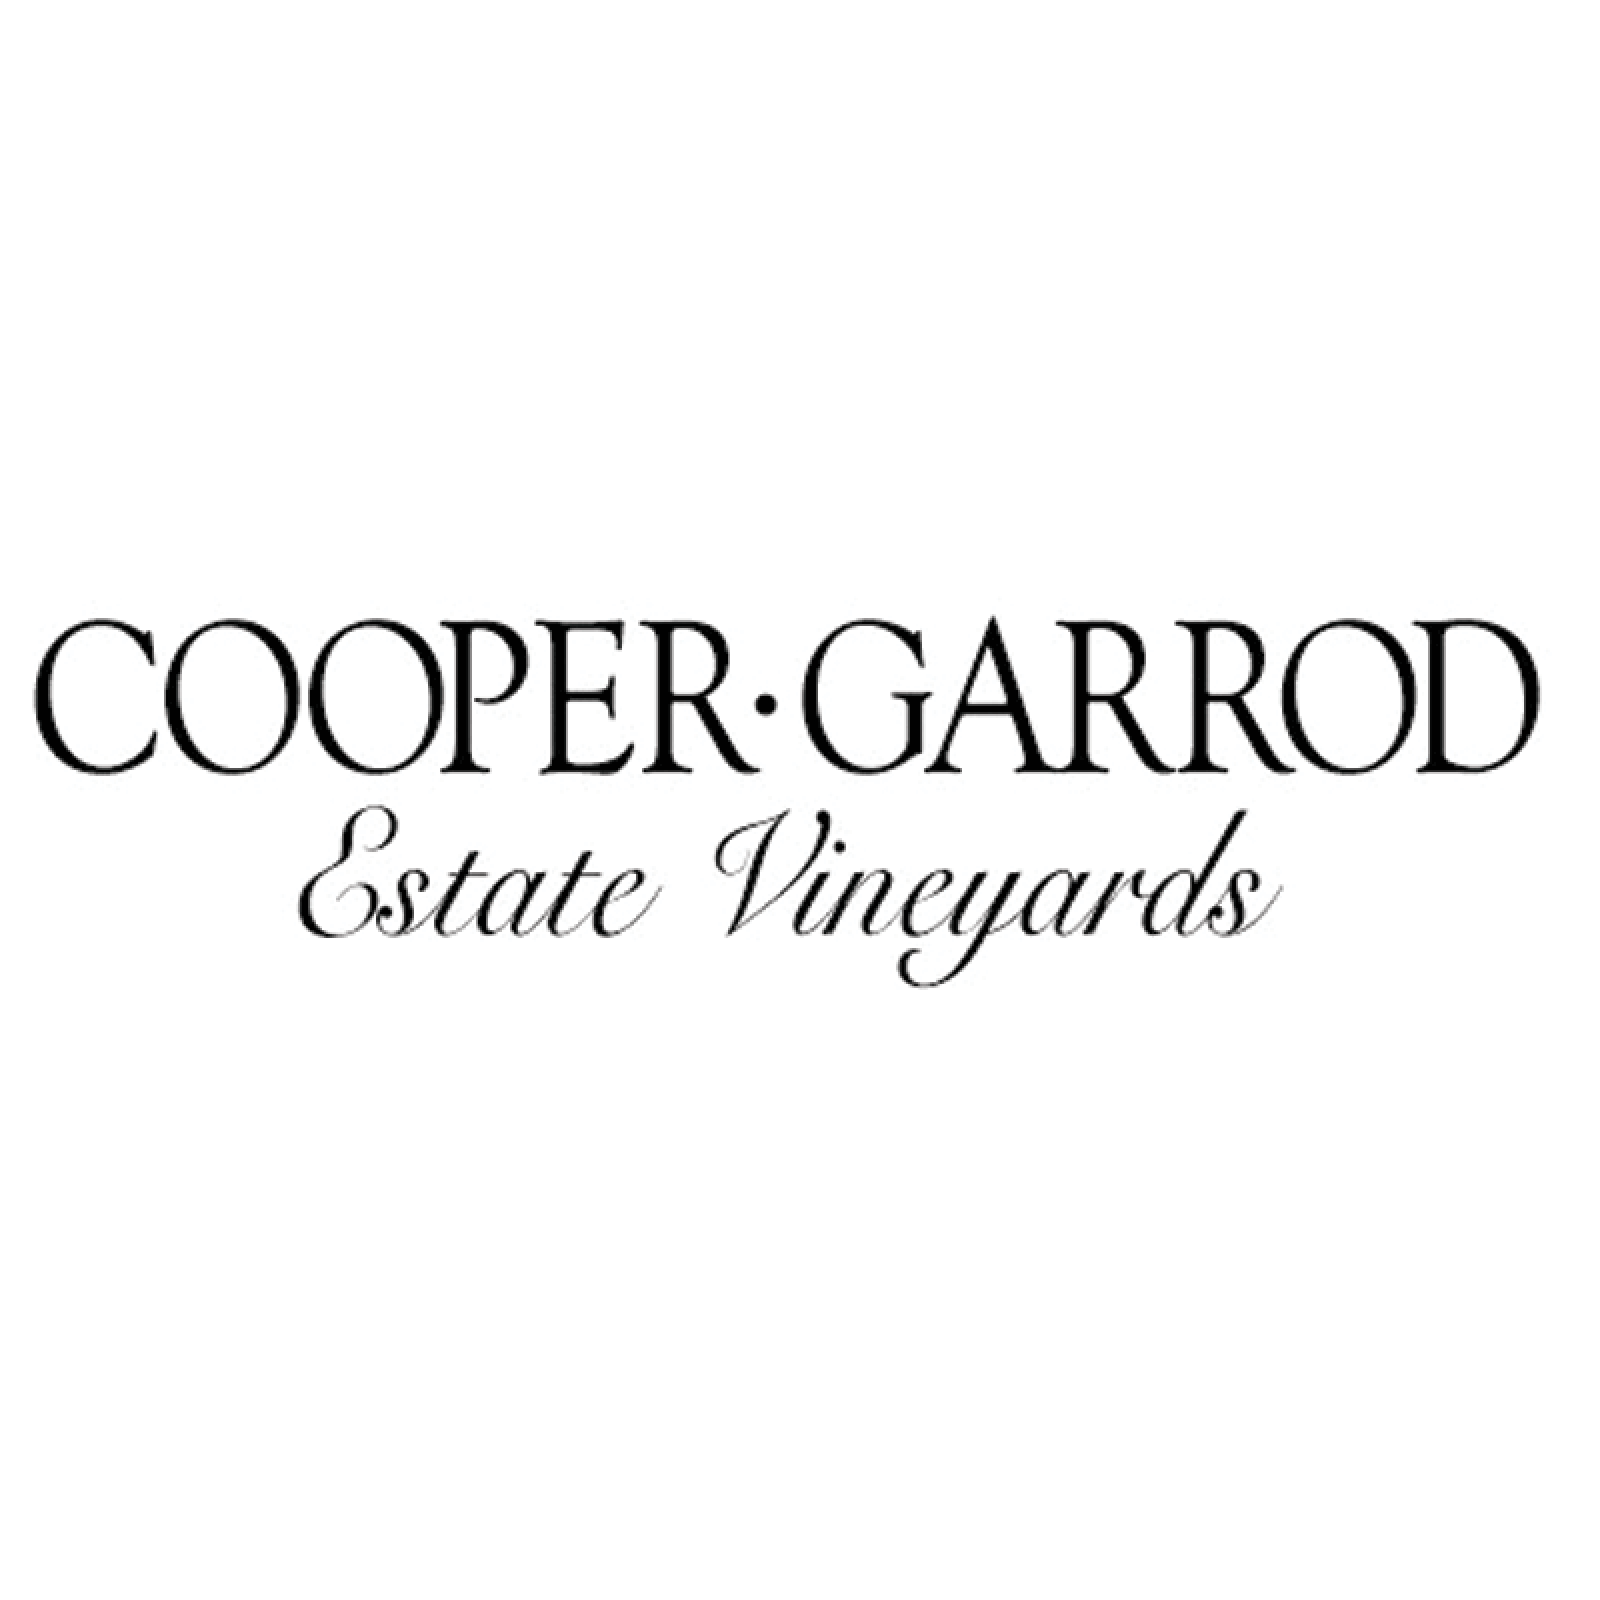 Cooper Garrod F86 Test Pilot 2019 Wine Label 